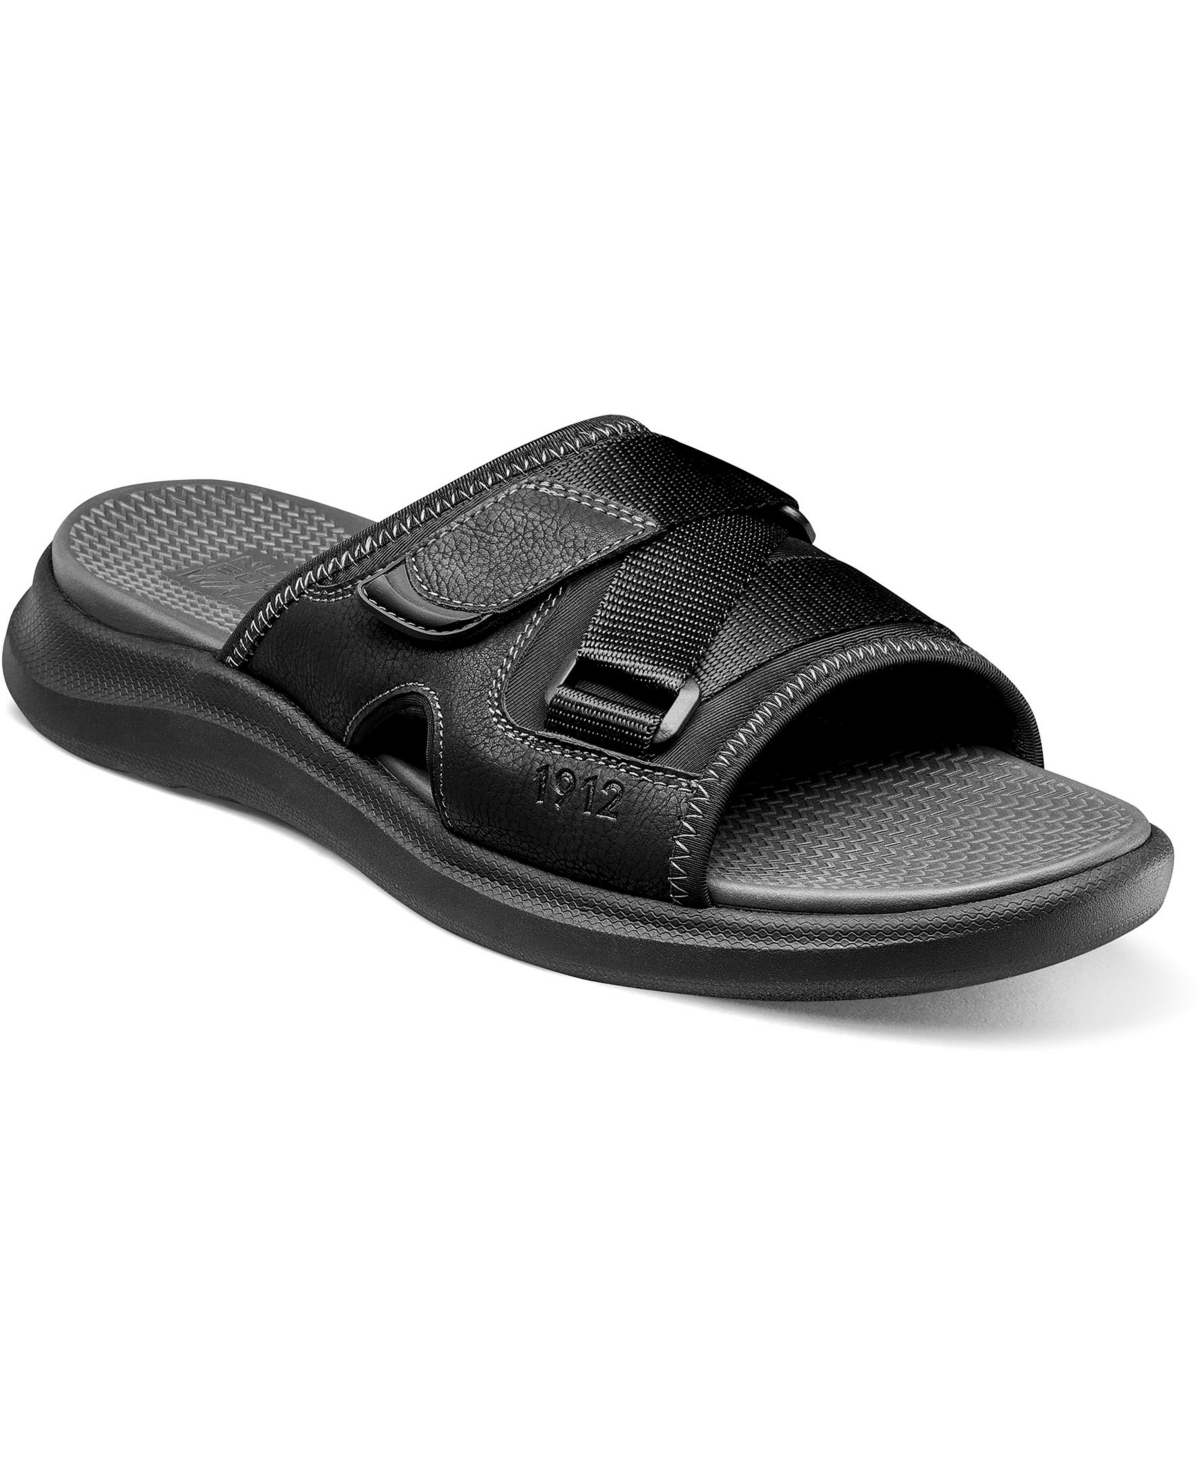 Men's Rio Vista Slide Sandals - Black